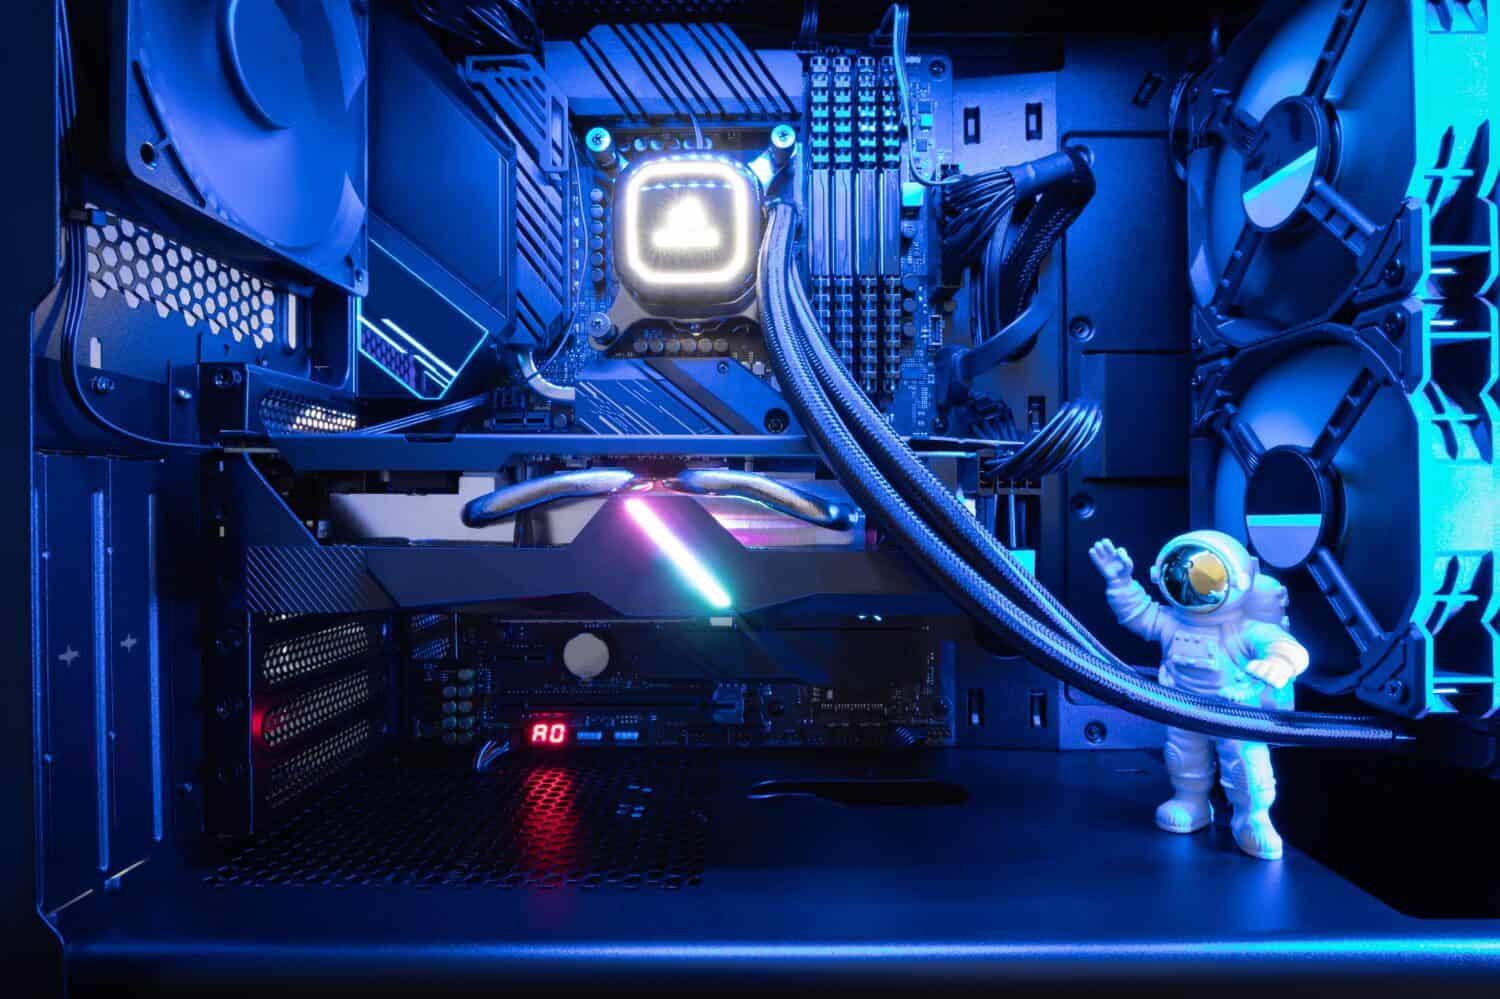 Close-up view of a custom-built gaming PC with liquid CPU Cooler and RGB lighting. Premium gaming setup. Gaming computer. Desktop PC.